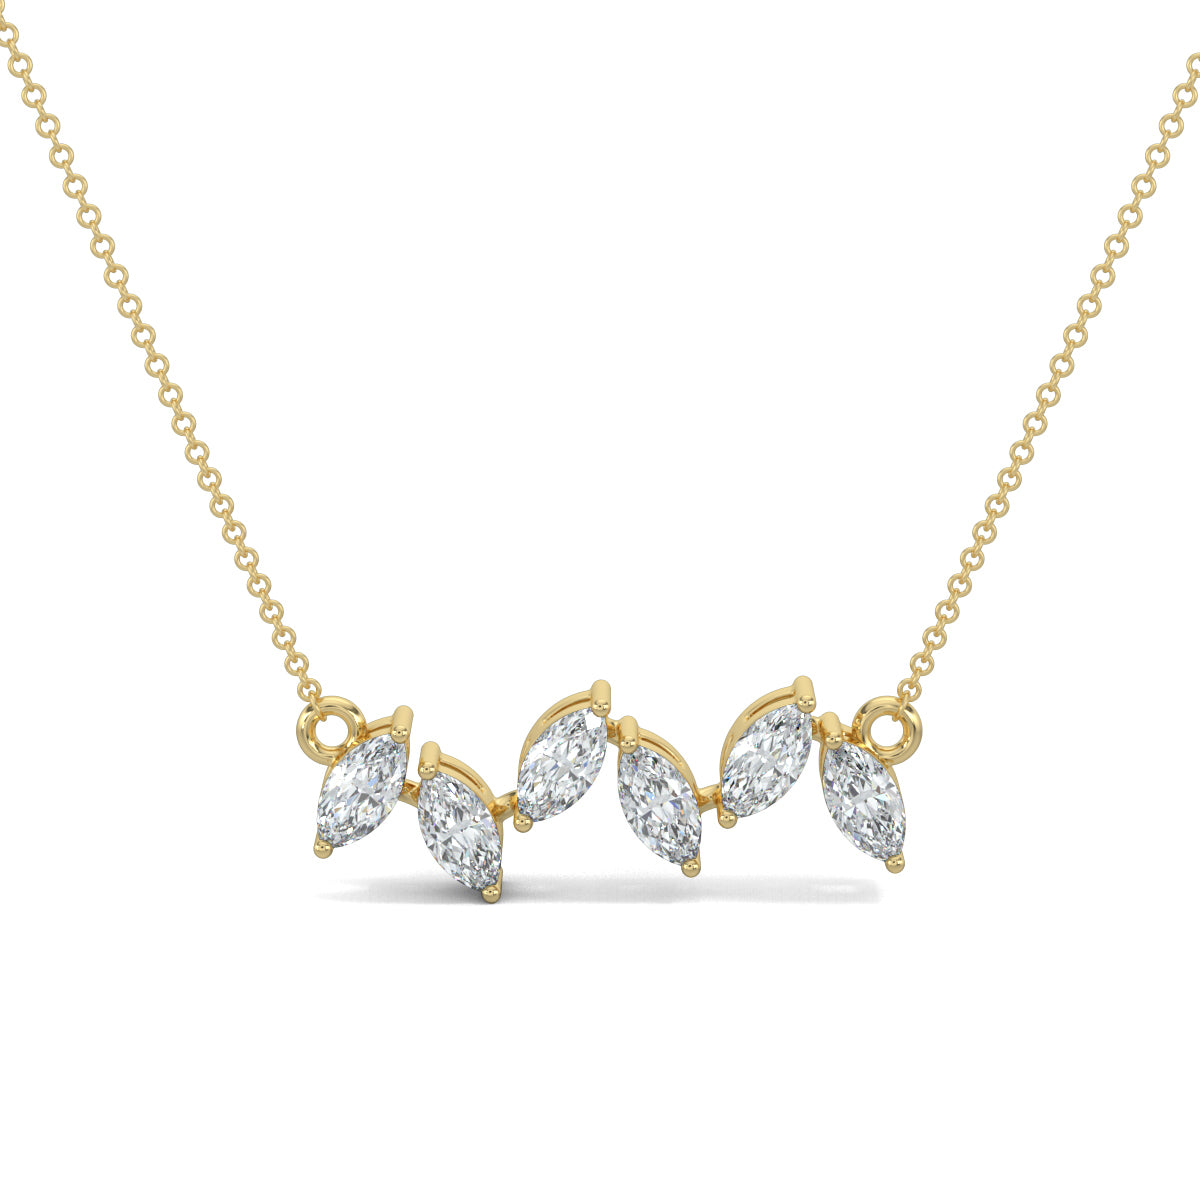 Yellow Gold, Diamond Pendants, Natural diamond pendant, Lab-grown diamond pendant, Marquise diamond pendant, Embrace design pendant, Ethically sourced diamonds, Elegant jewelry accessory